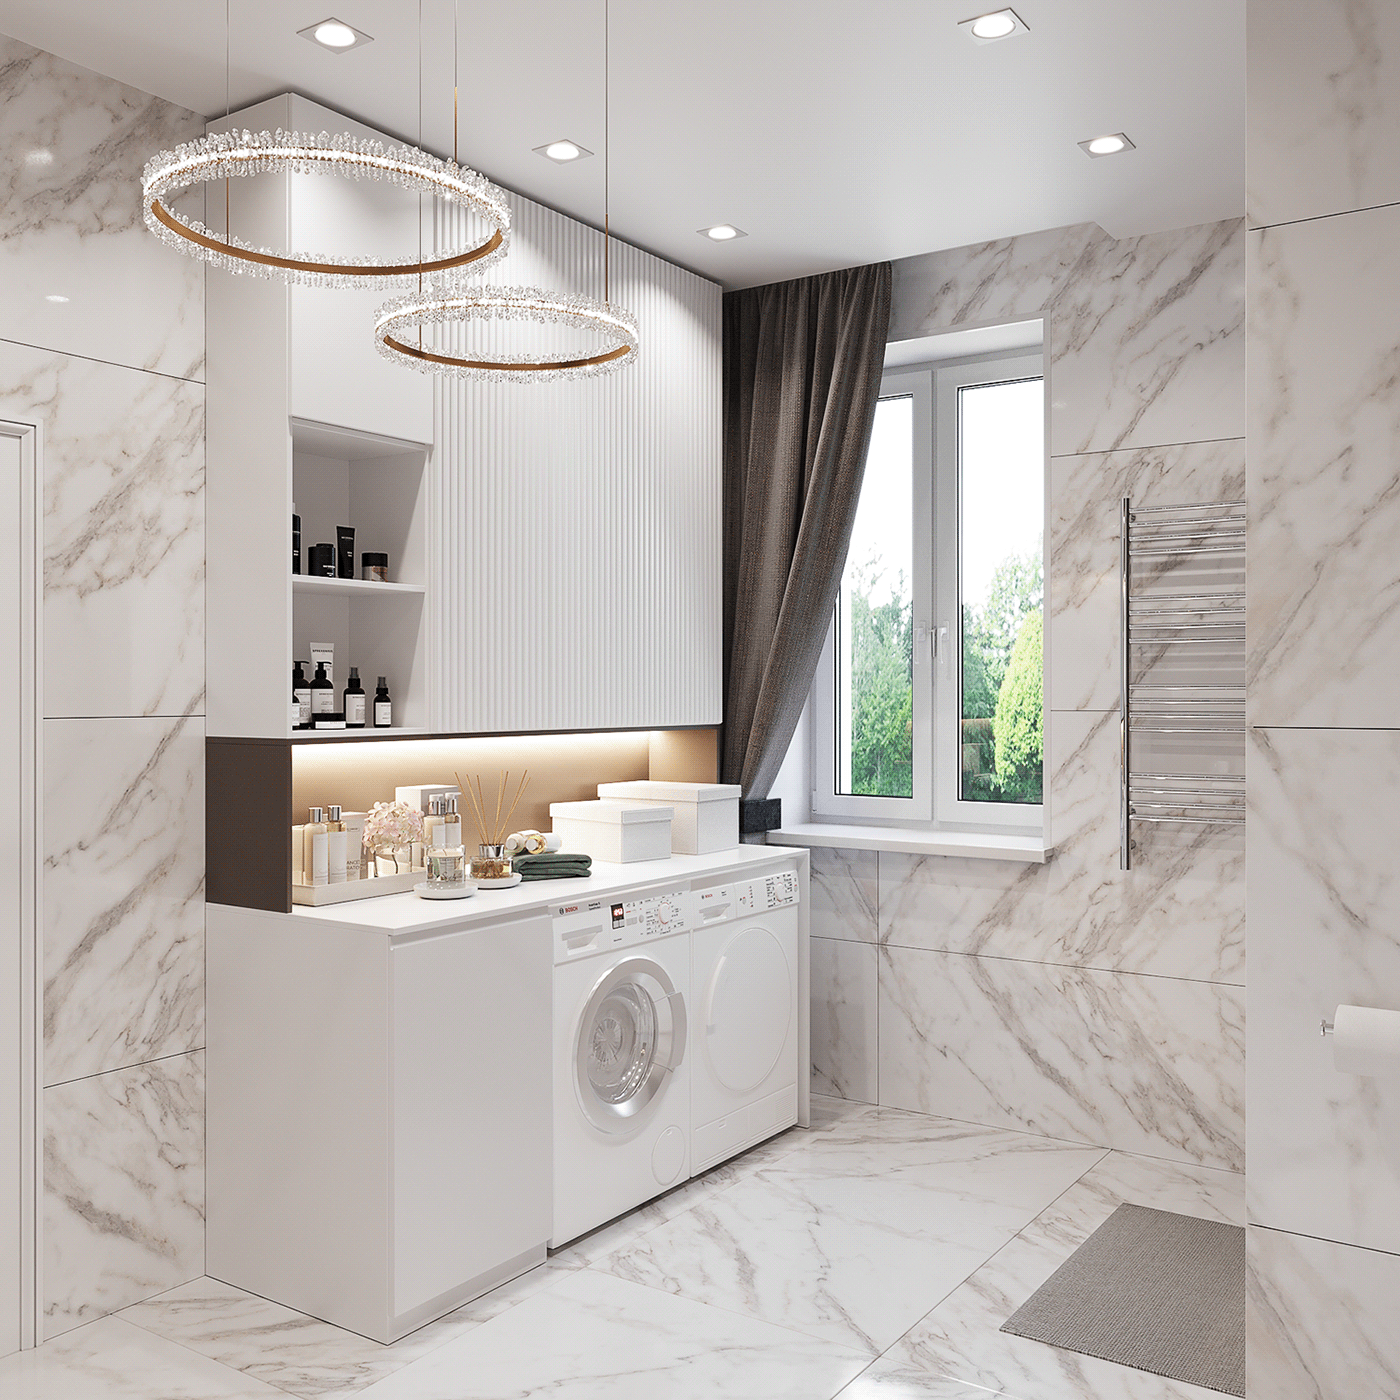 3D 3ds max bathroom corona interior design  Render visualization